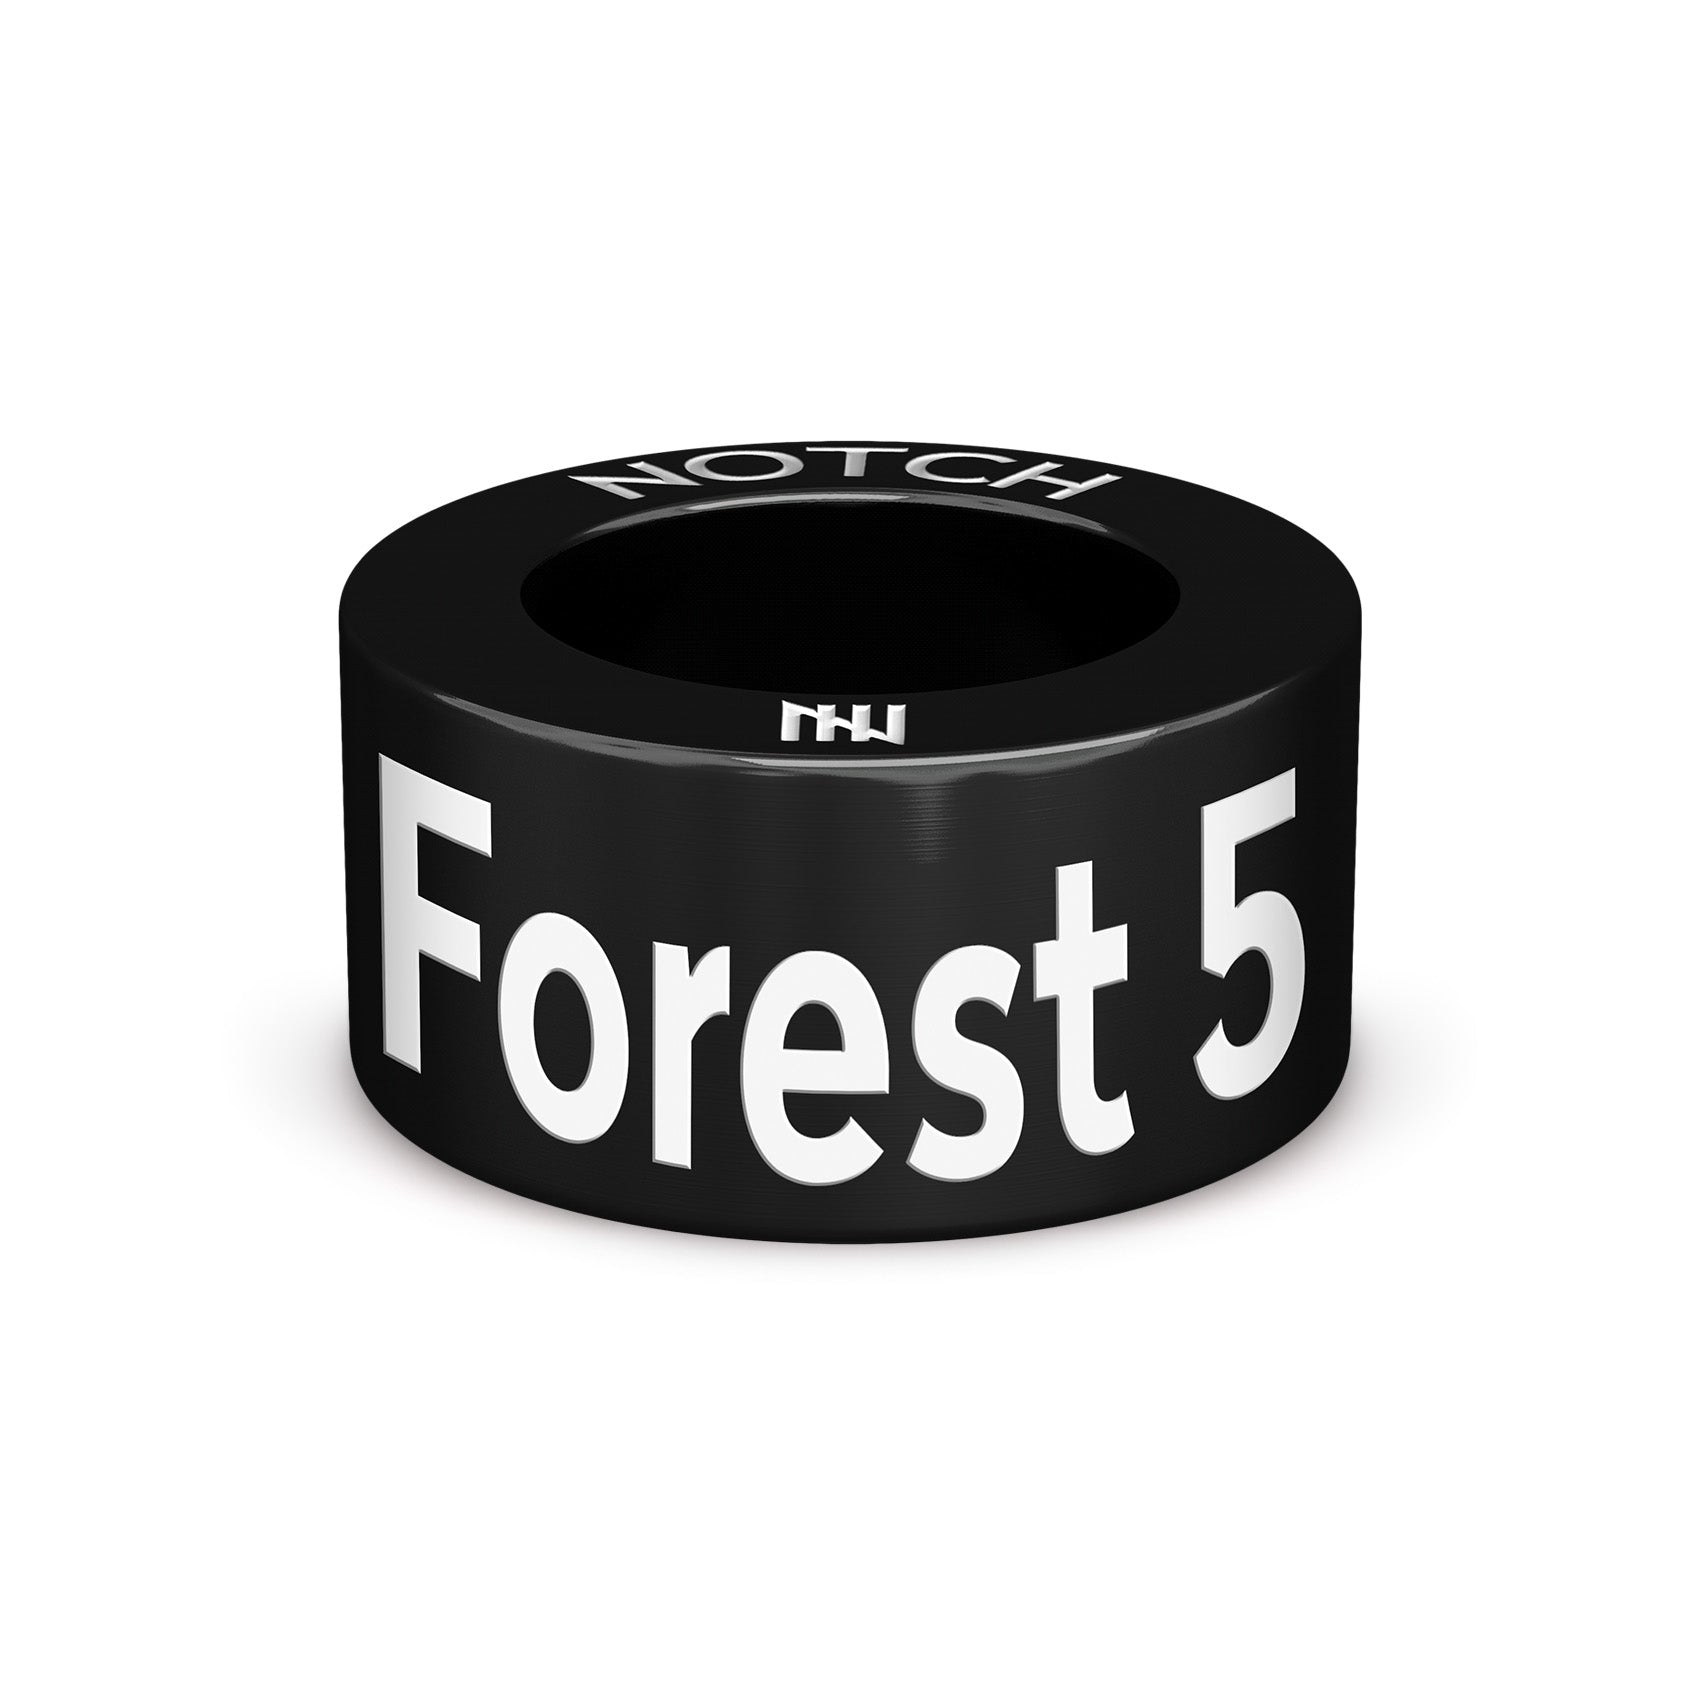 Forest 5 NOTCH Charm